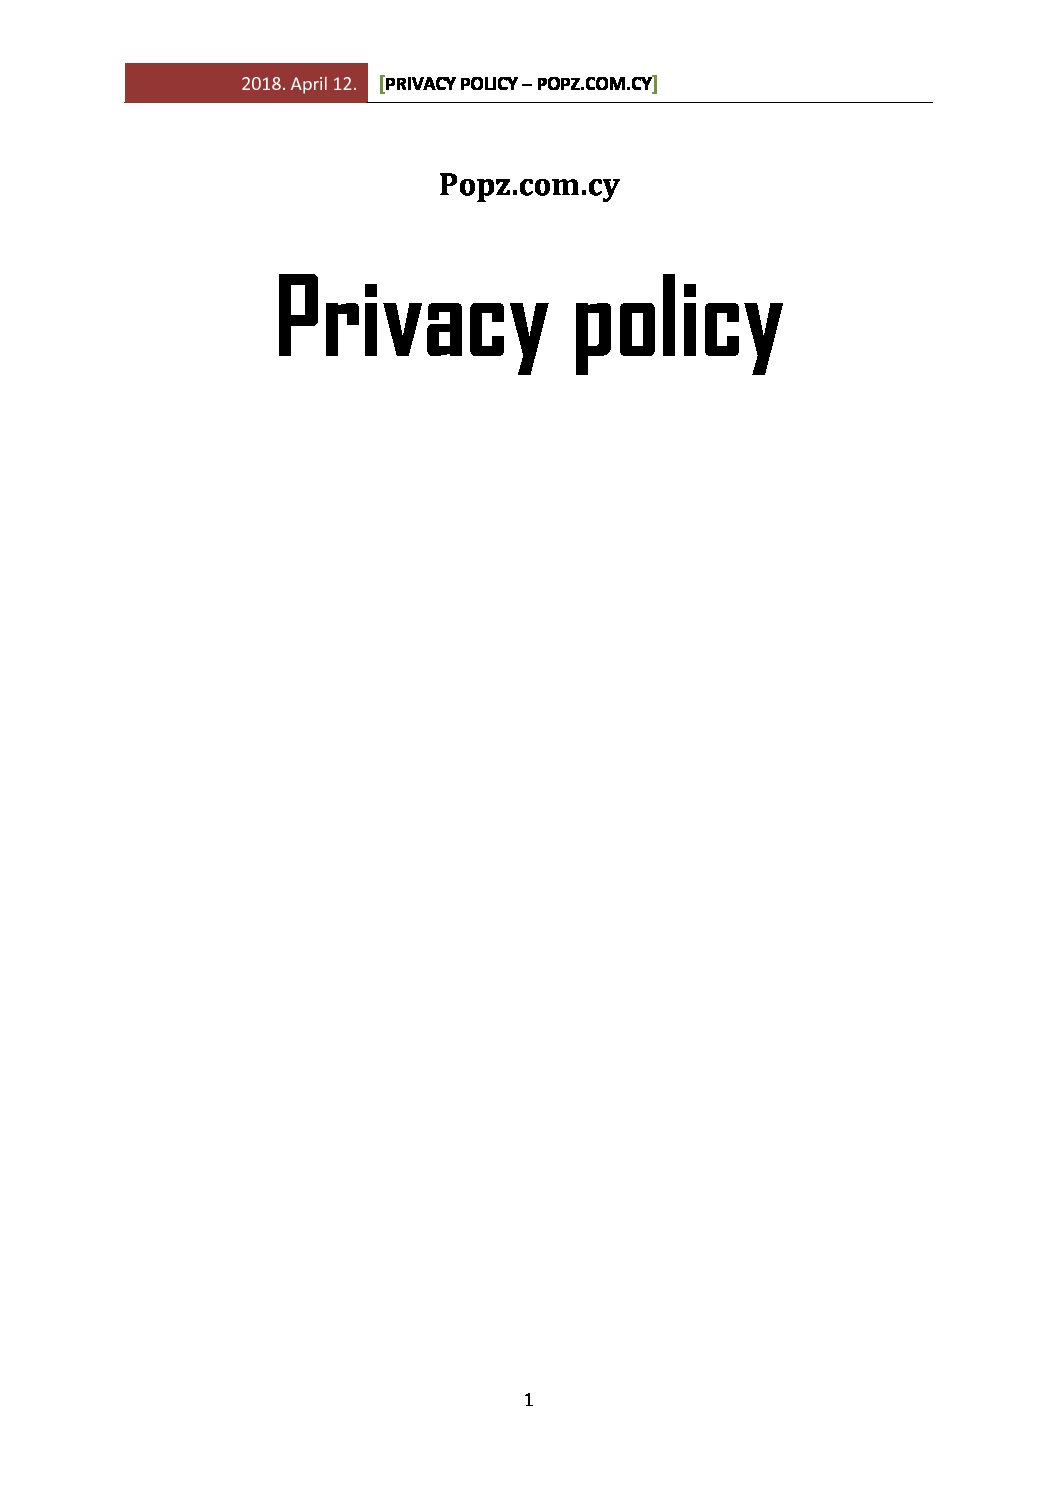 popzcyprus-privacy-policy